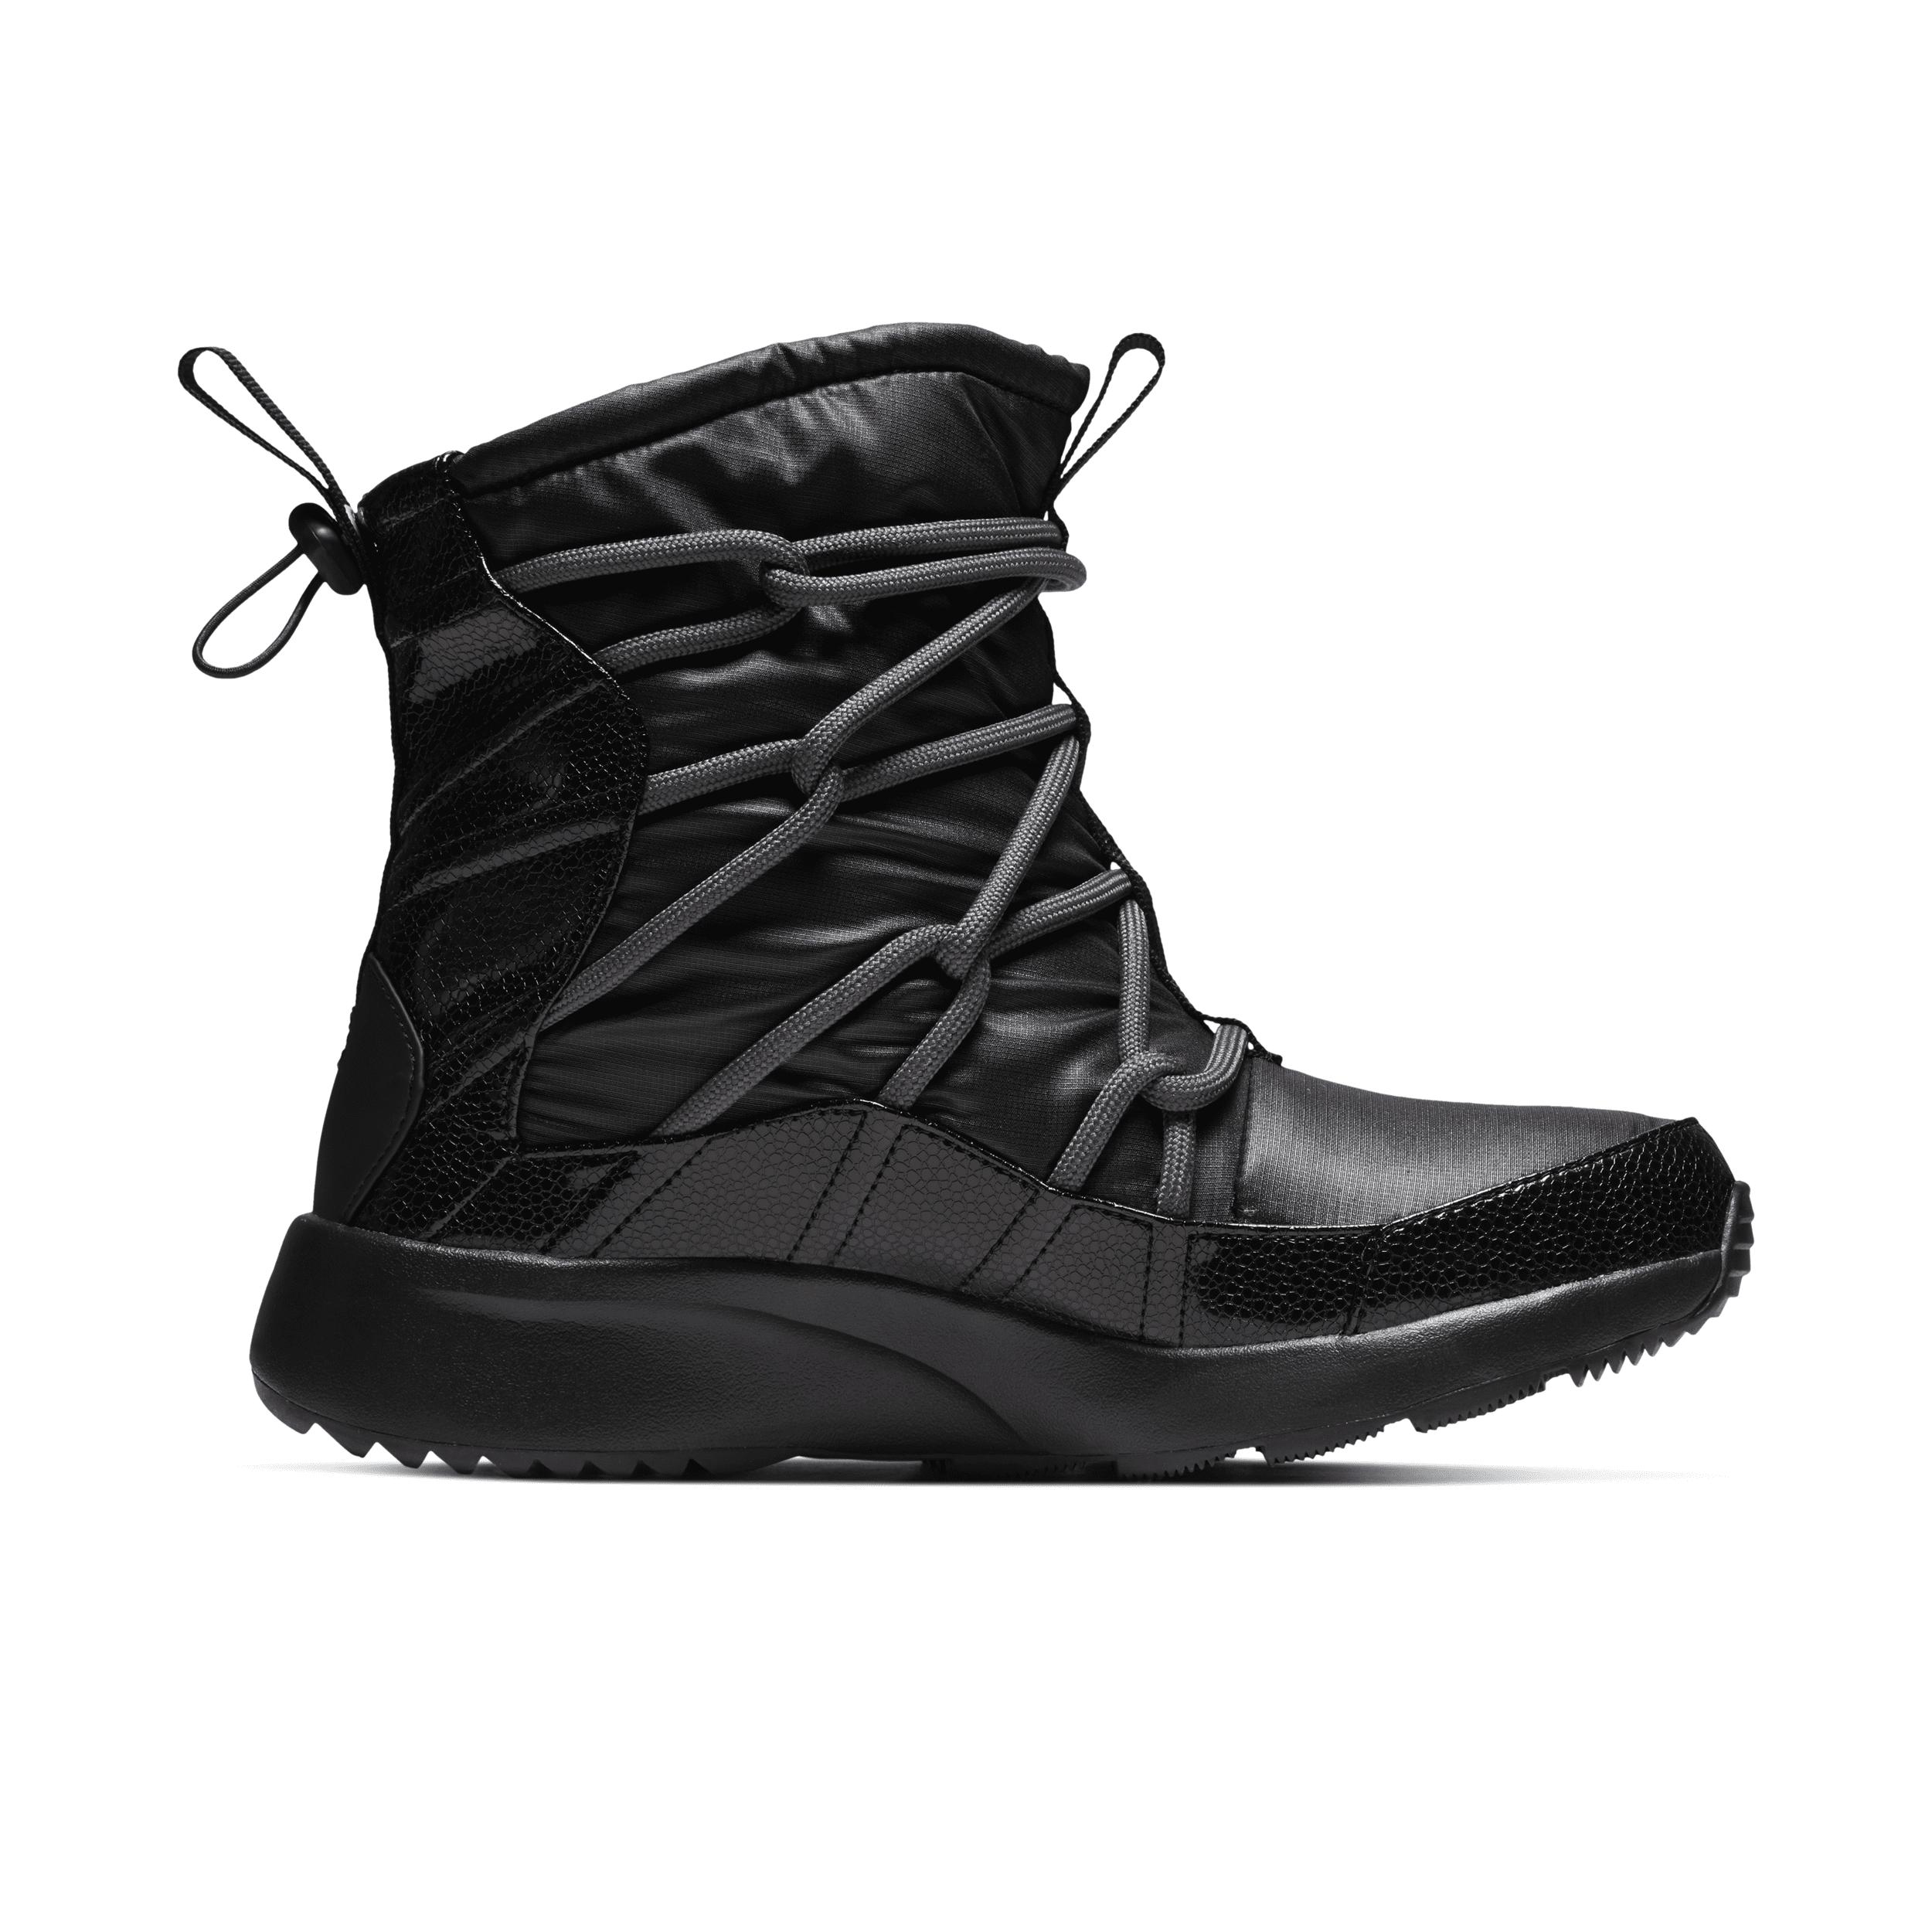 Nike Tanjun High Rise Shoes In Black, | Lyst